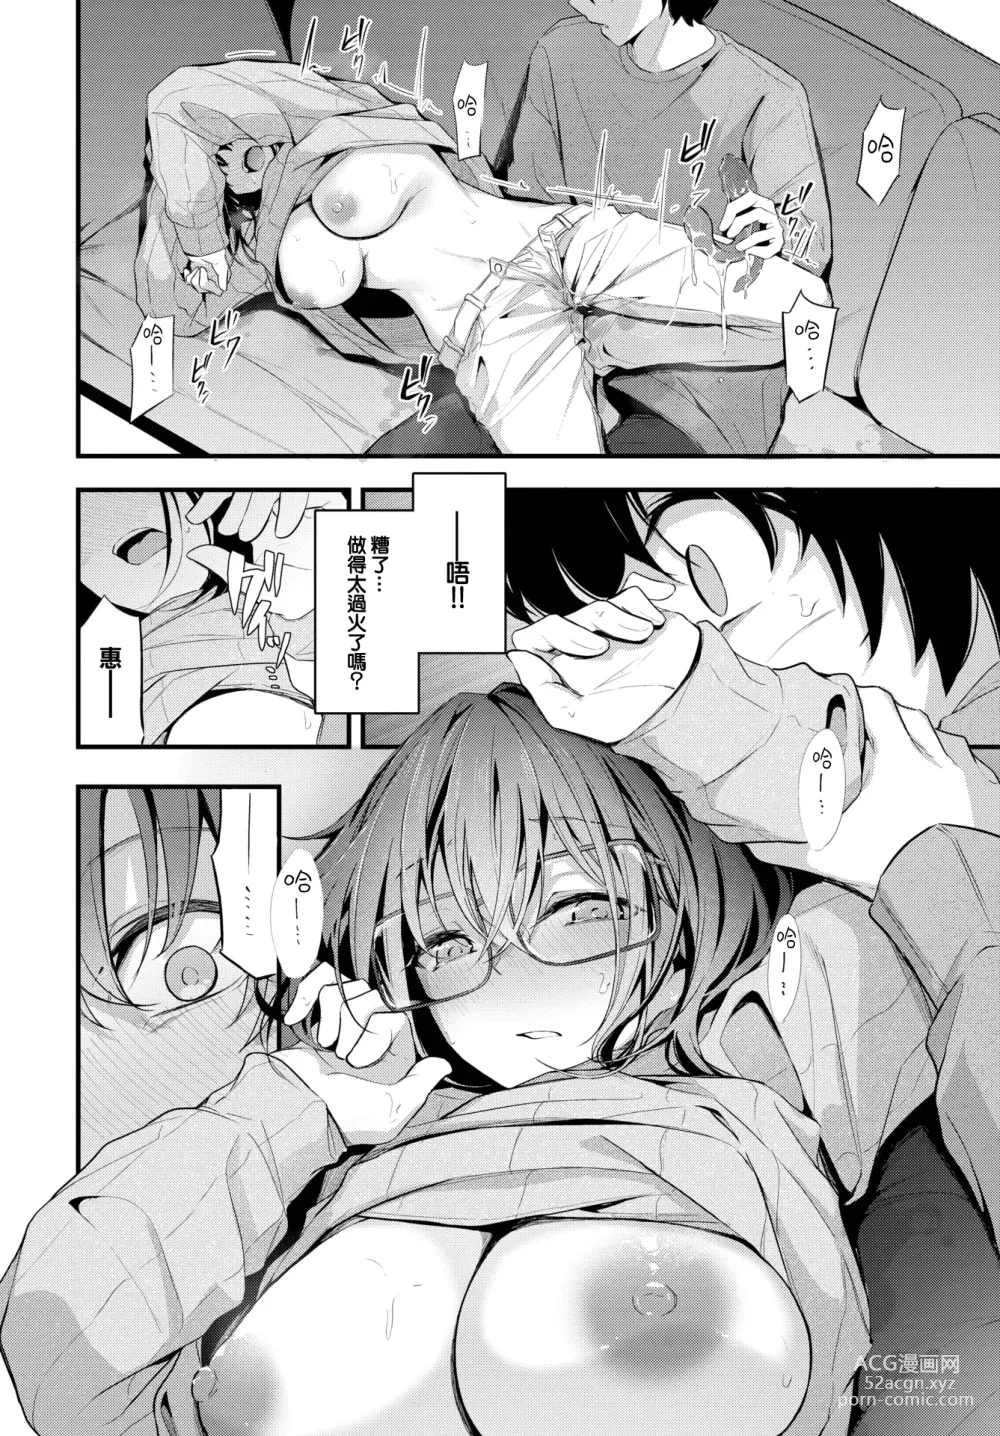 Page 13 of manga Futari Gurashi